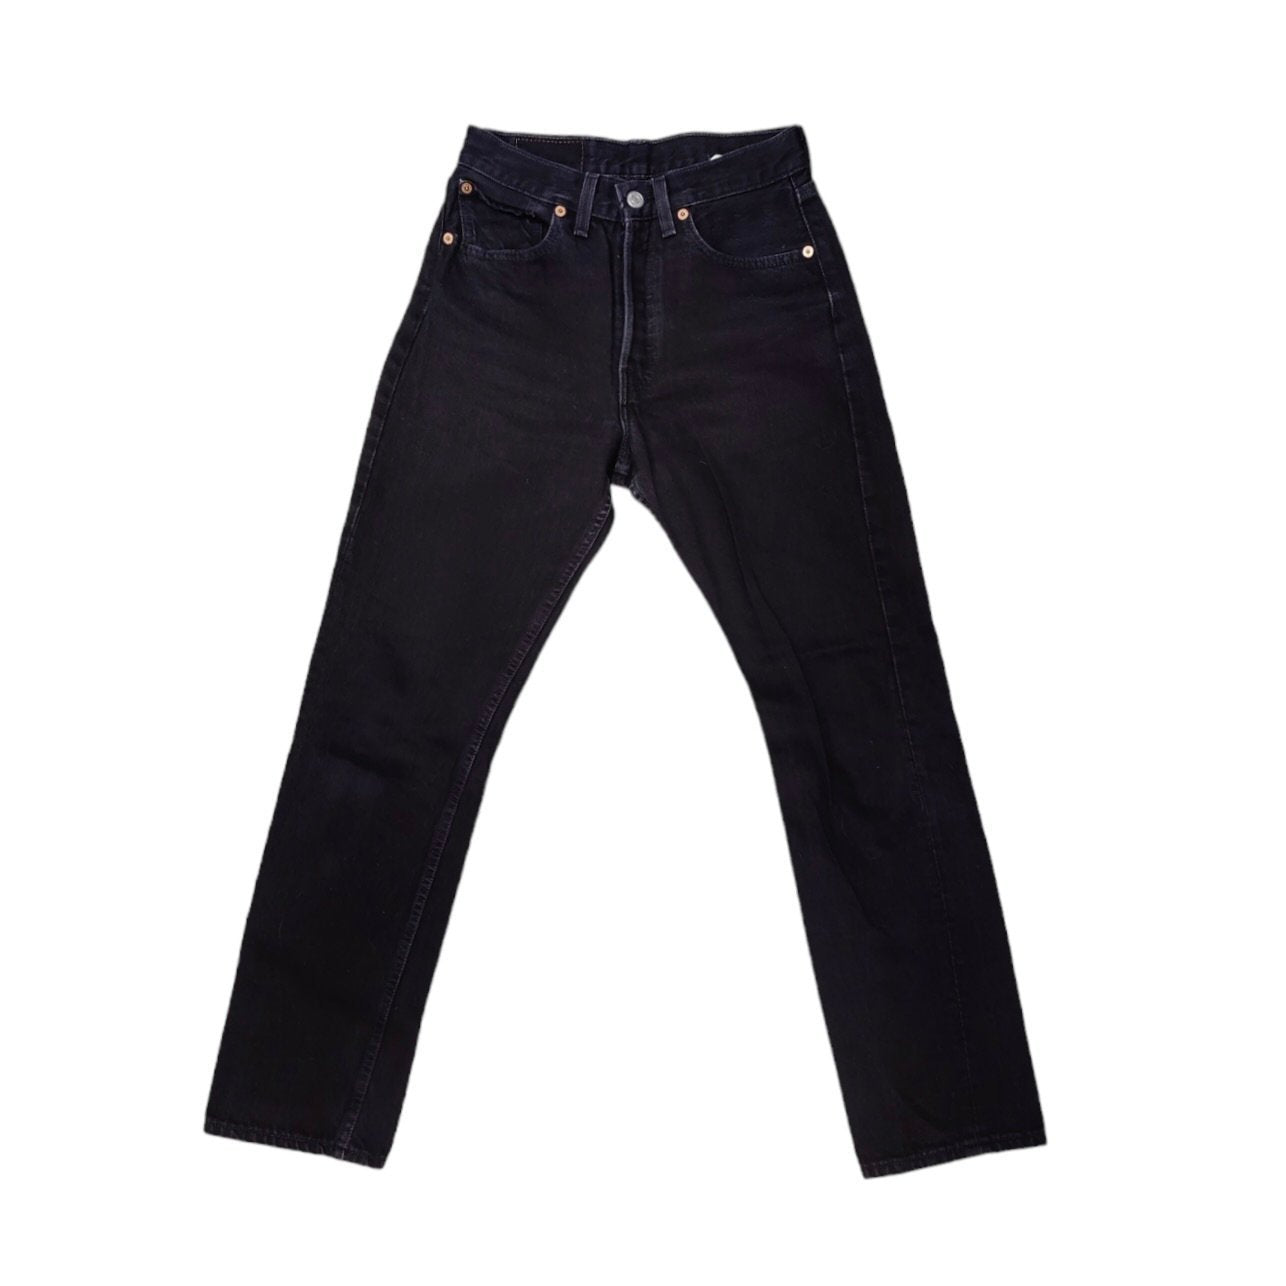 Vintage Levis 501 Black Jeans (W27/L30)(W)